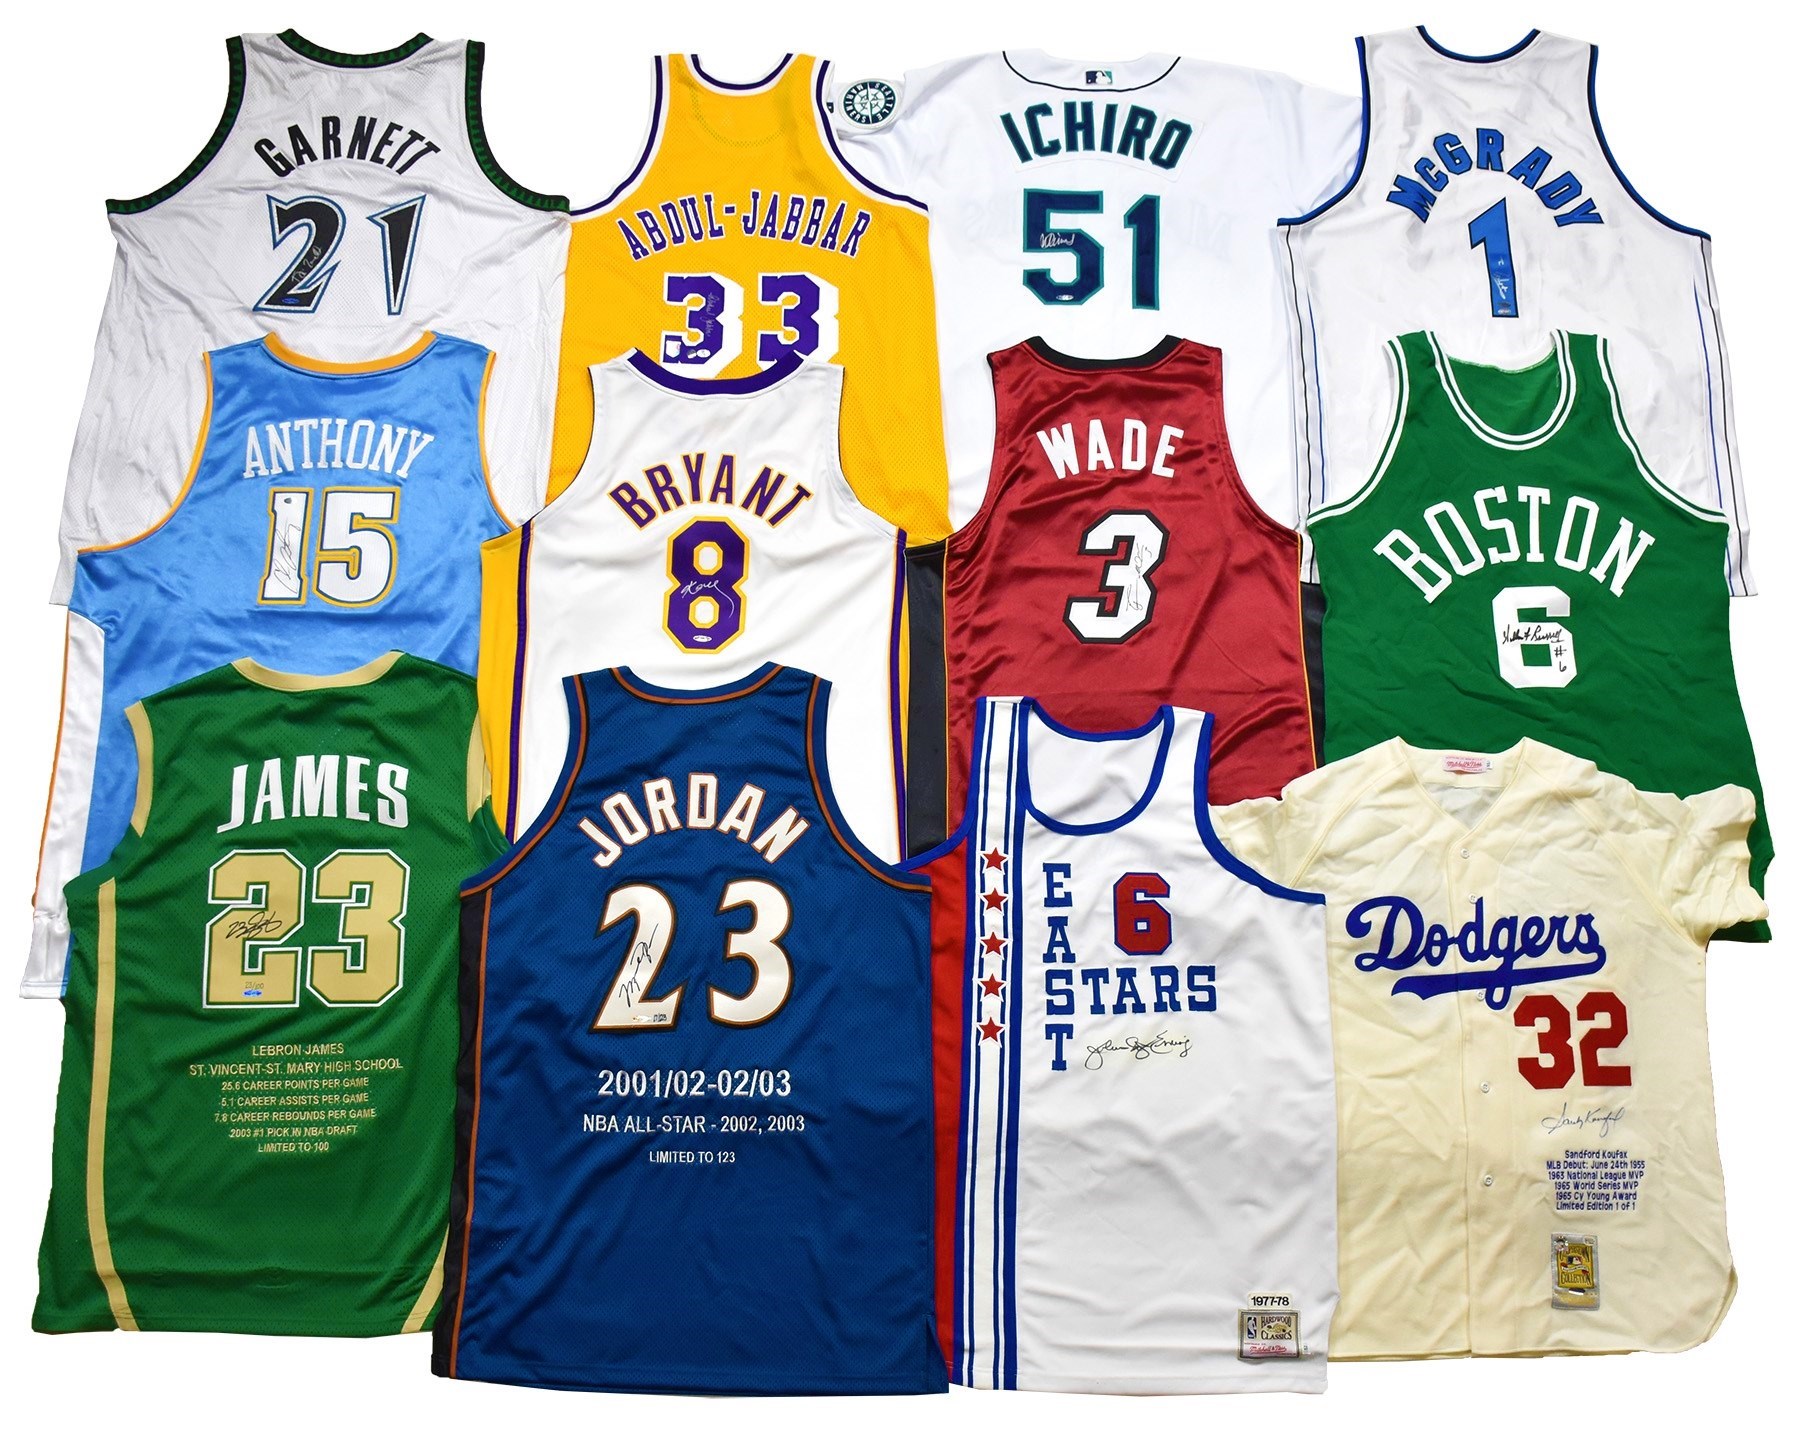 Basketball - Major Sport Legends Signed Jersey Collection with LeBron, Kobe & Jordan (35+)